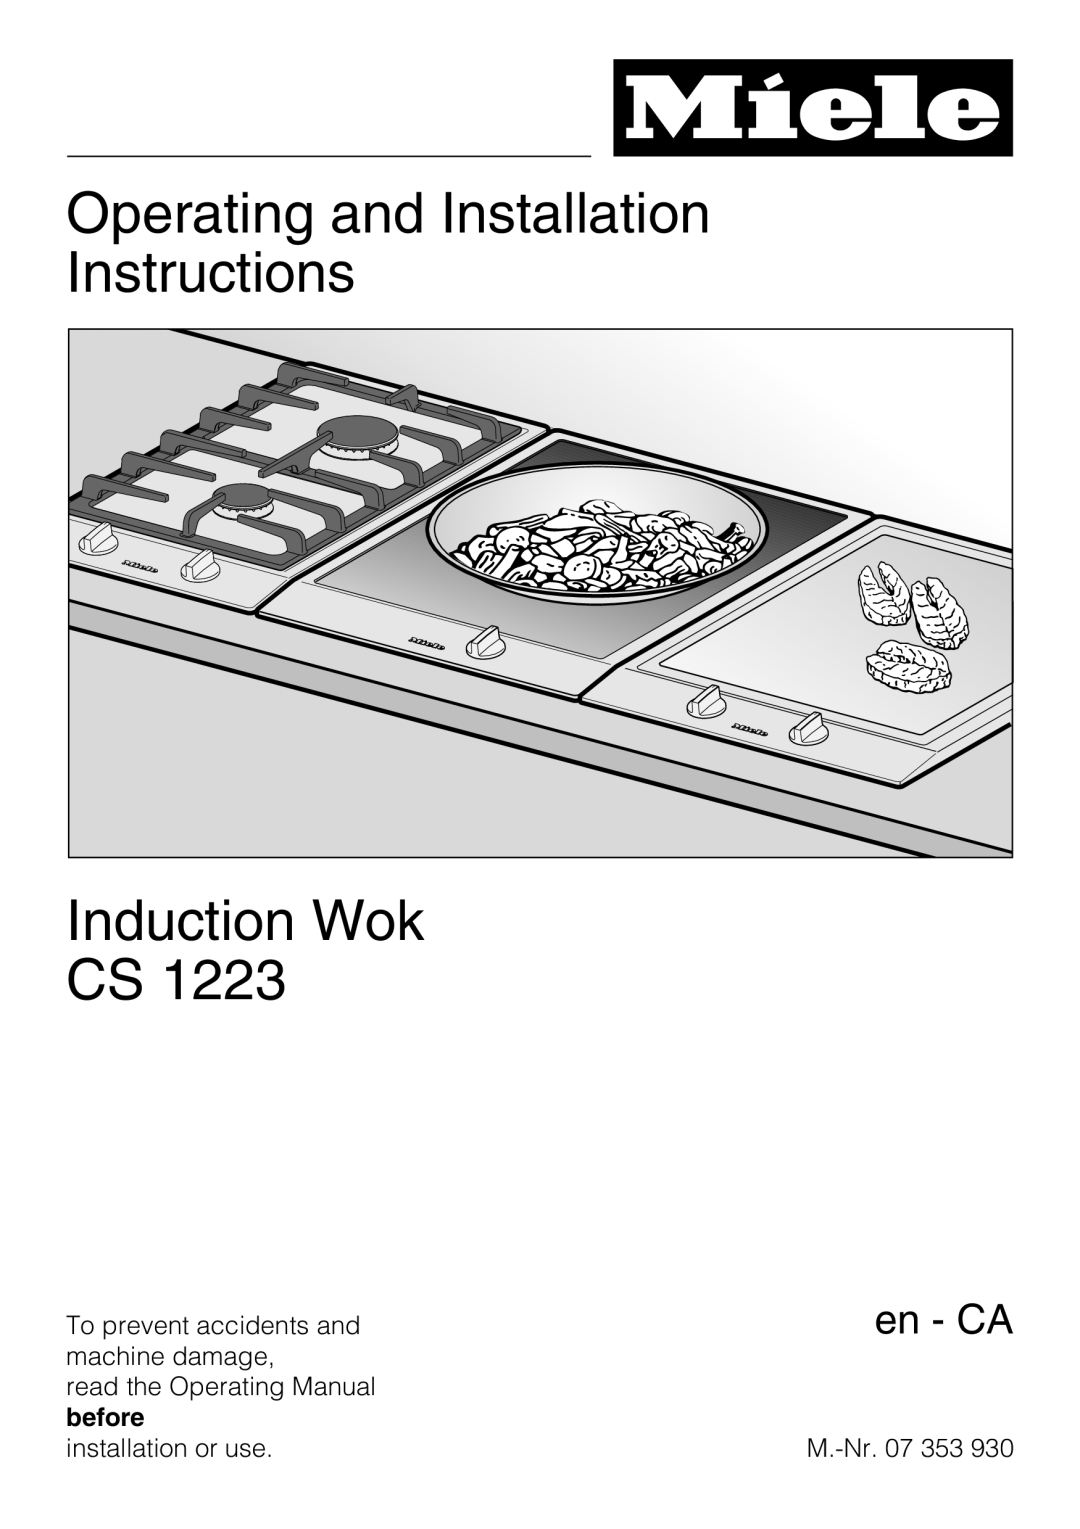 Miele CS 1223 installation instructions Operating and Installation Instructions Induction Wok CS, en - CA 